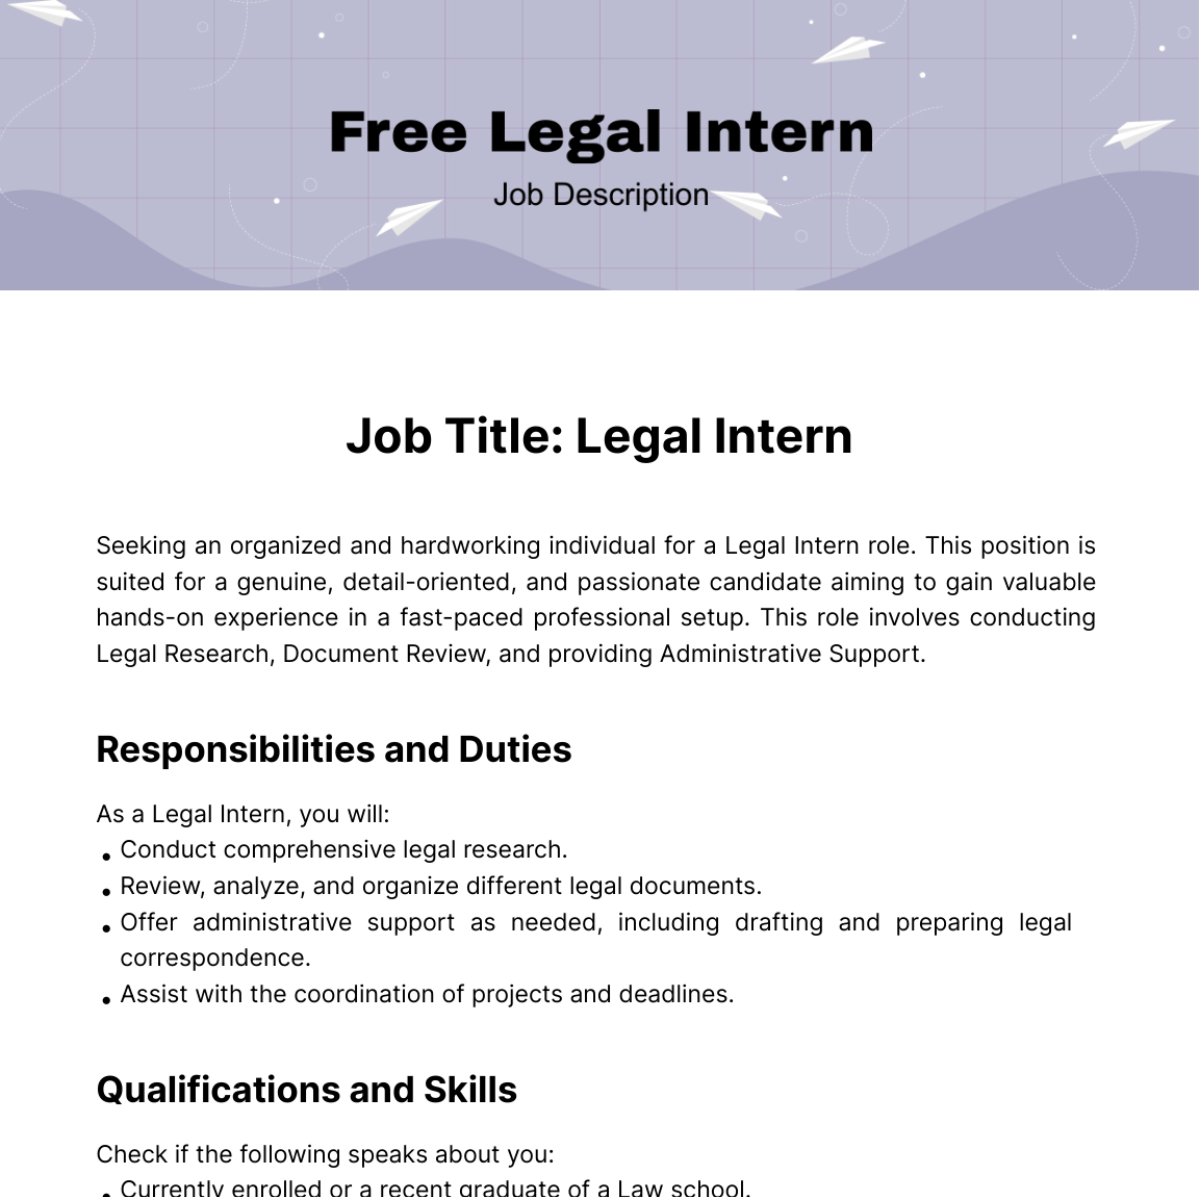 Free Legal Intern Job Description Template